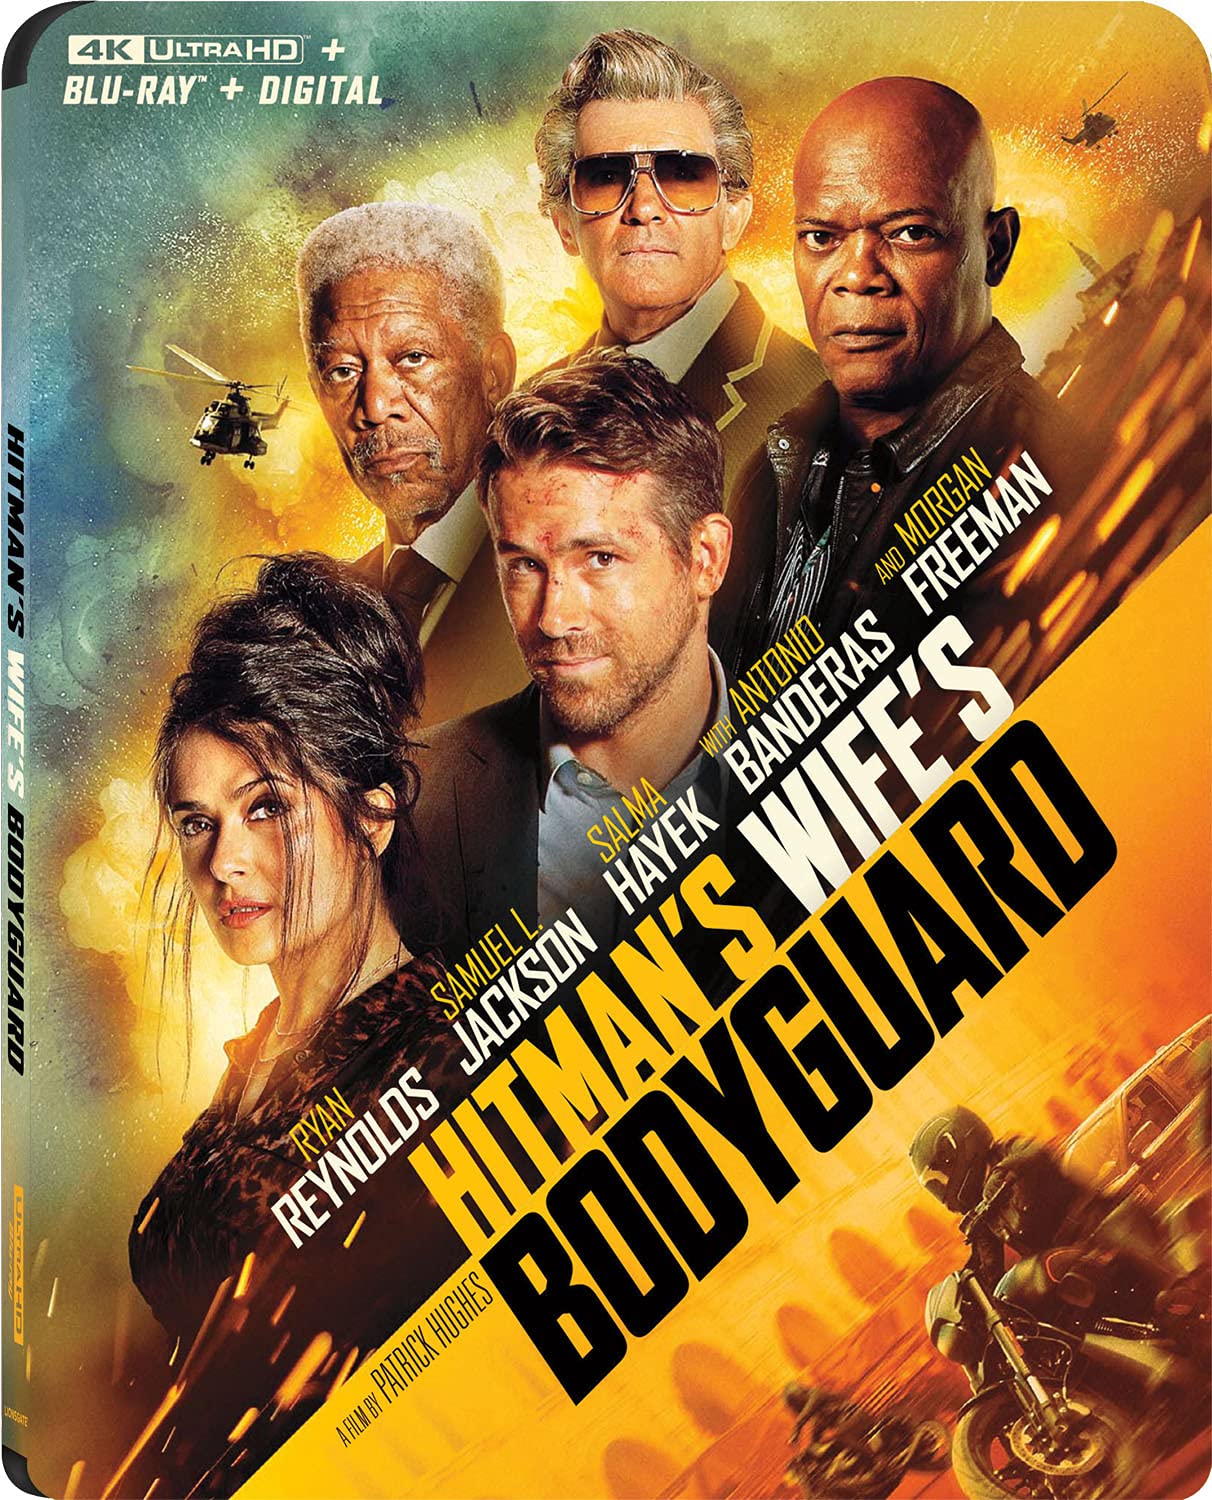 The Hitman's Wife's Bodyguard (4K UHD + Digital +Blu-ray) $7, The Hitman's Bodyguard $5 + Free Shipping w/ Prime or on $25+